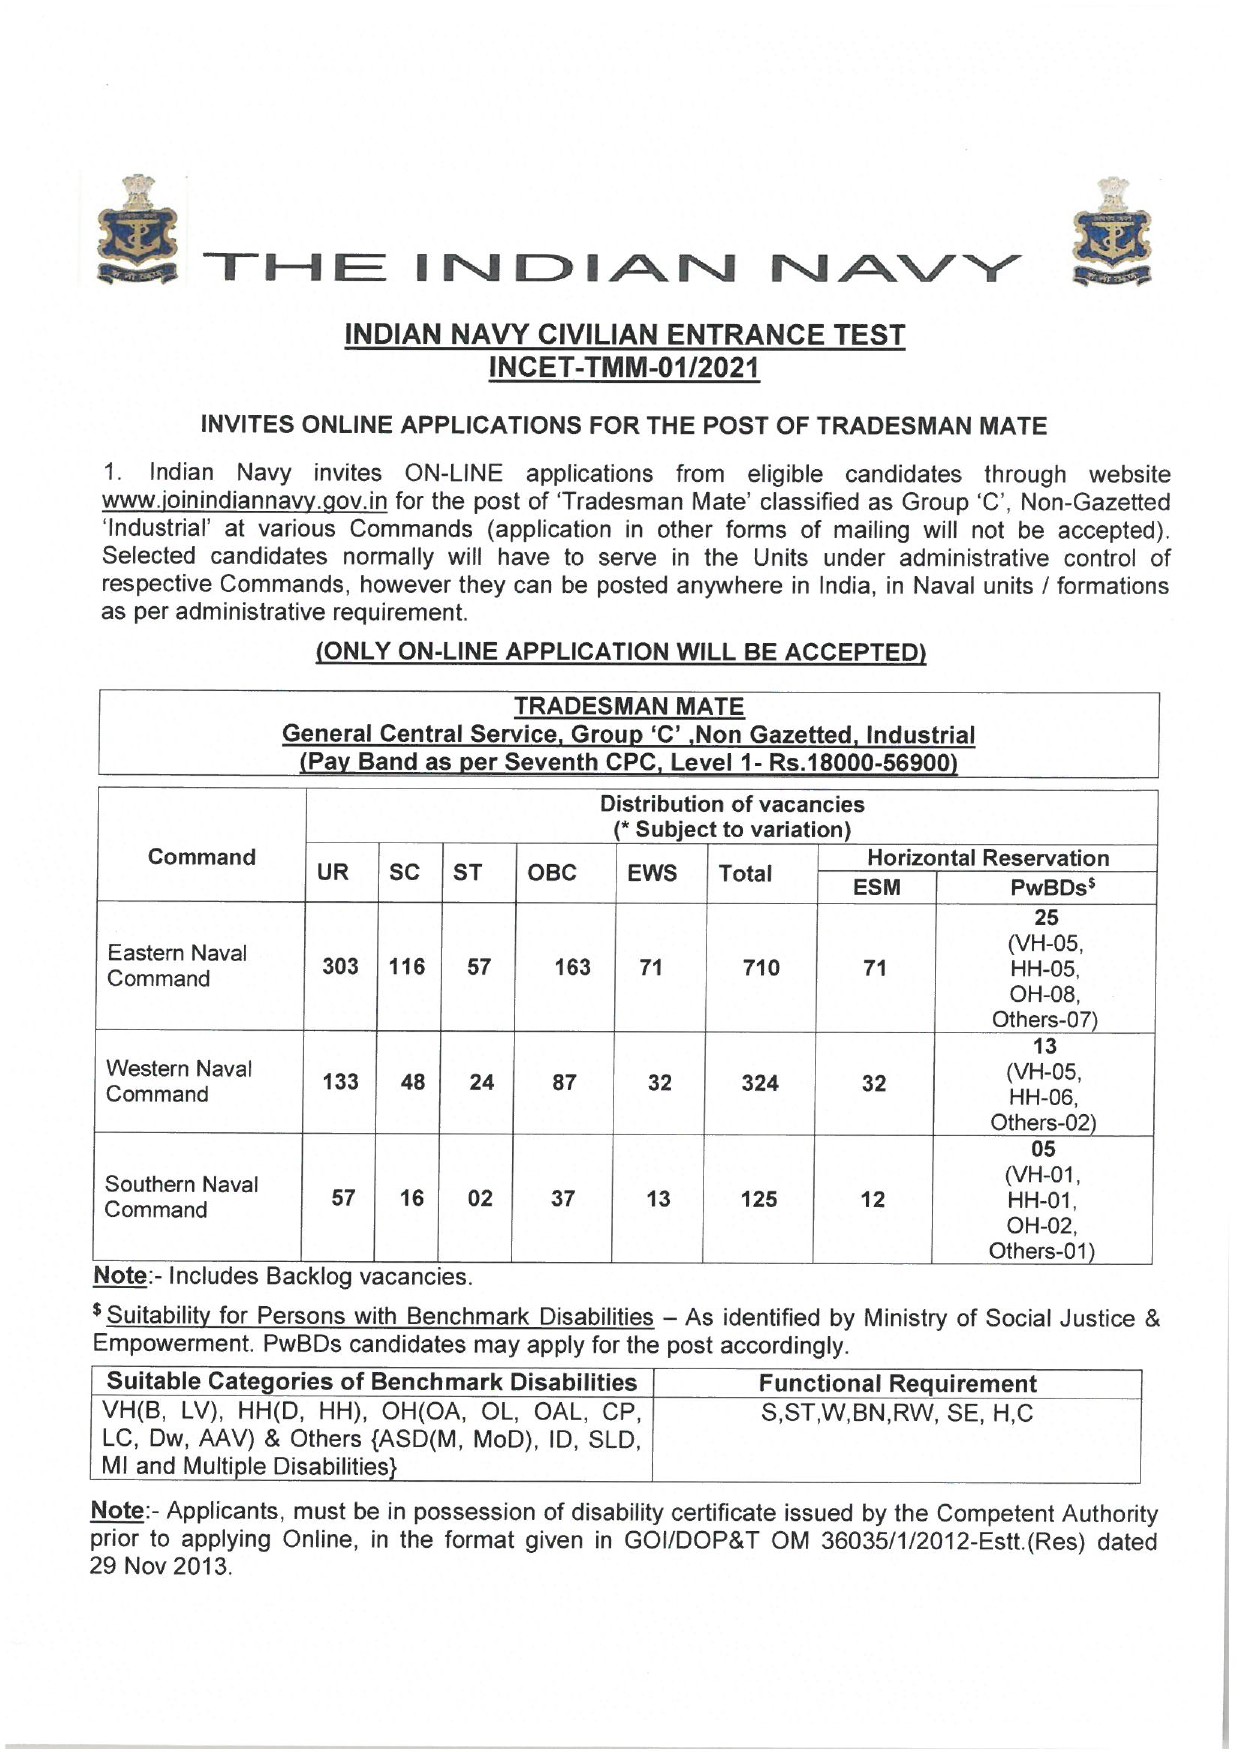 Indian Navy Recruitment 2021 Notification - Notification Image 1